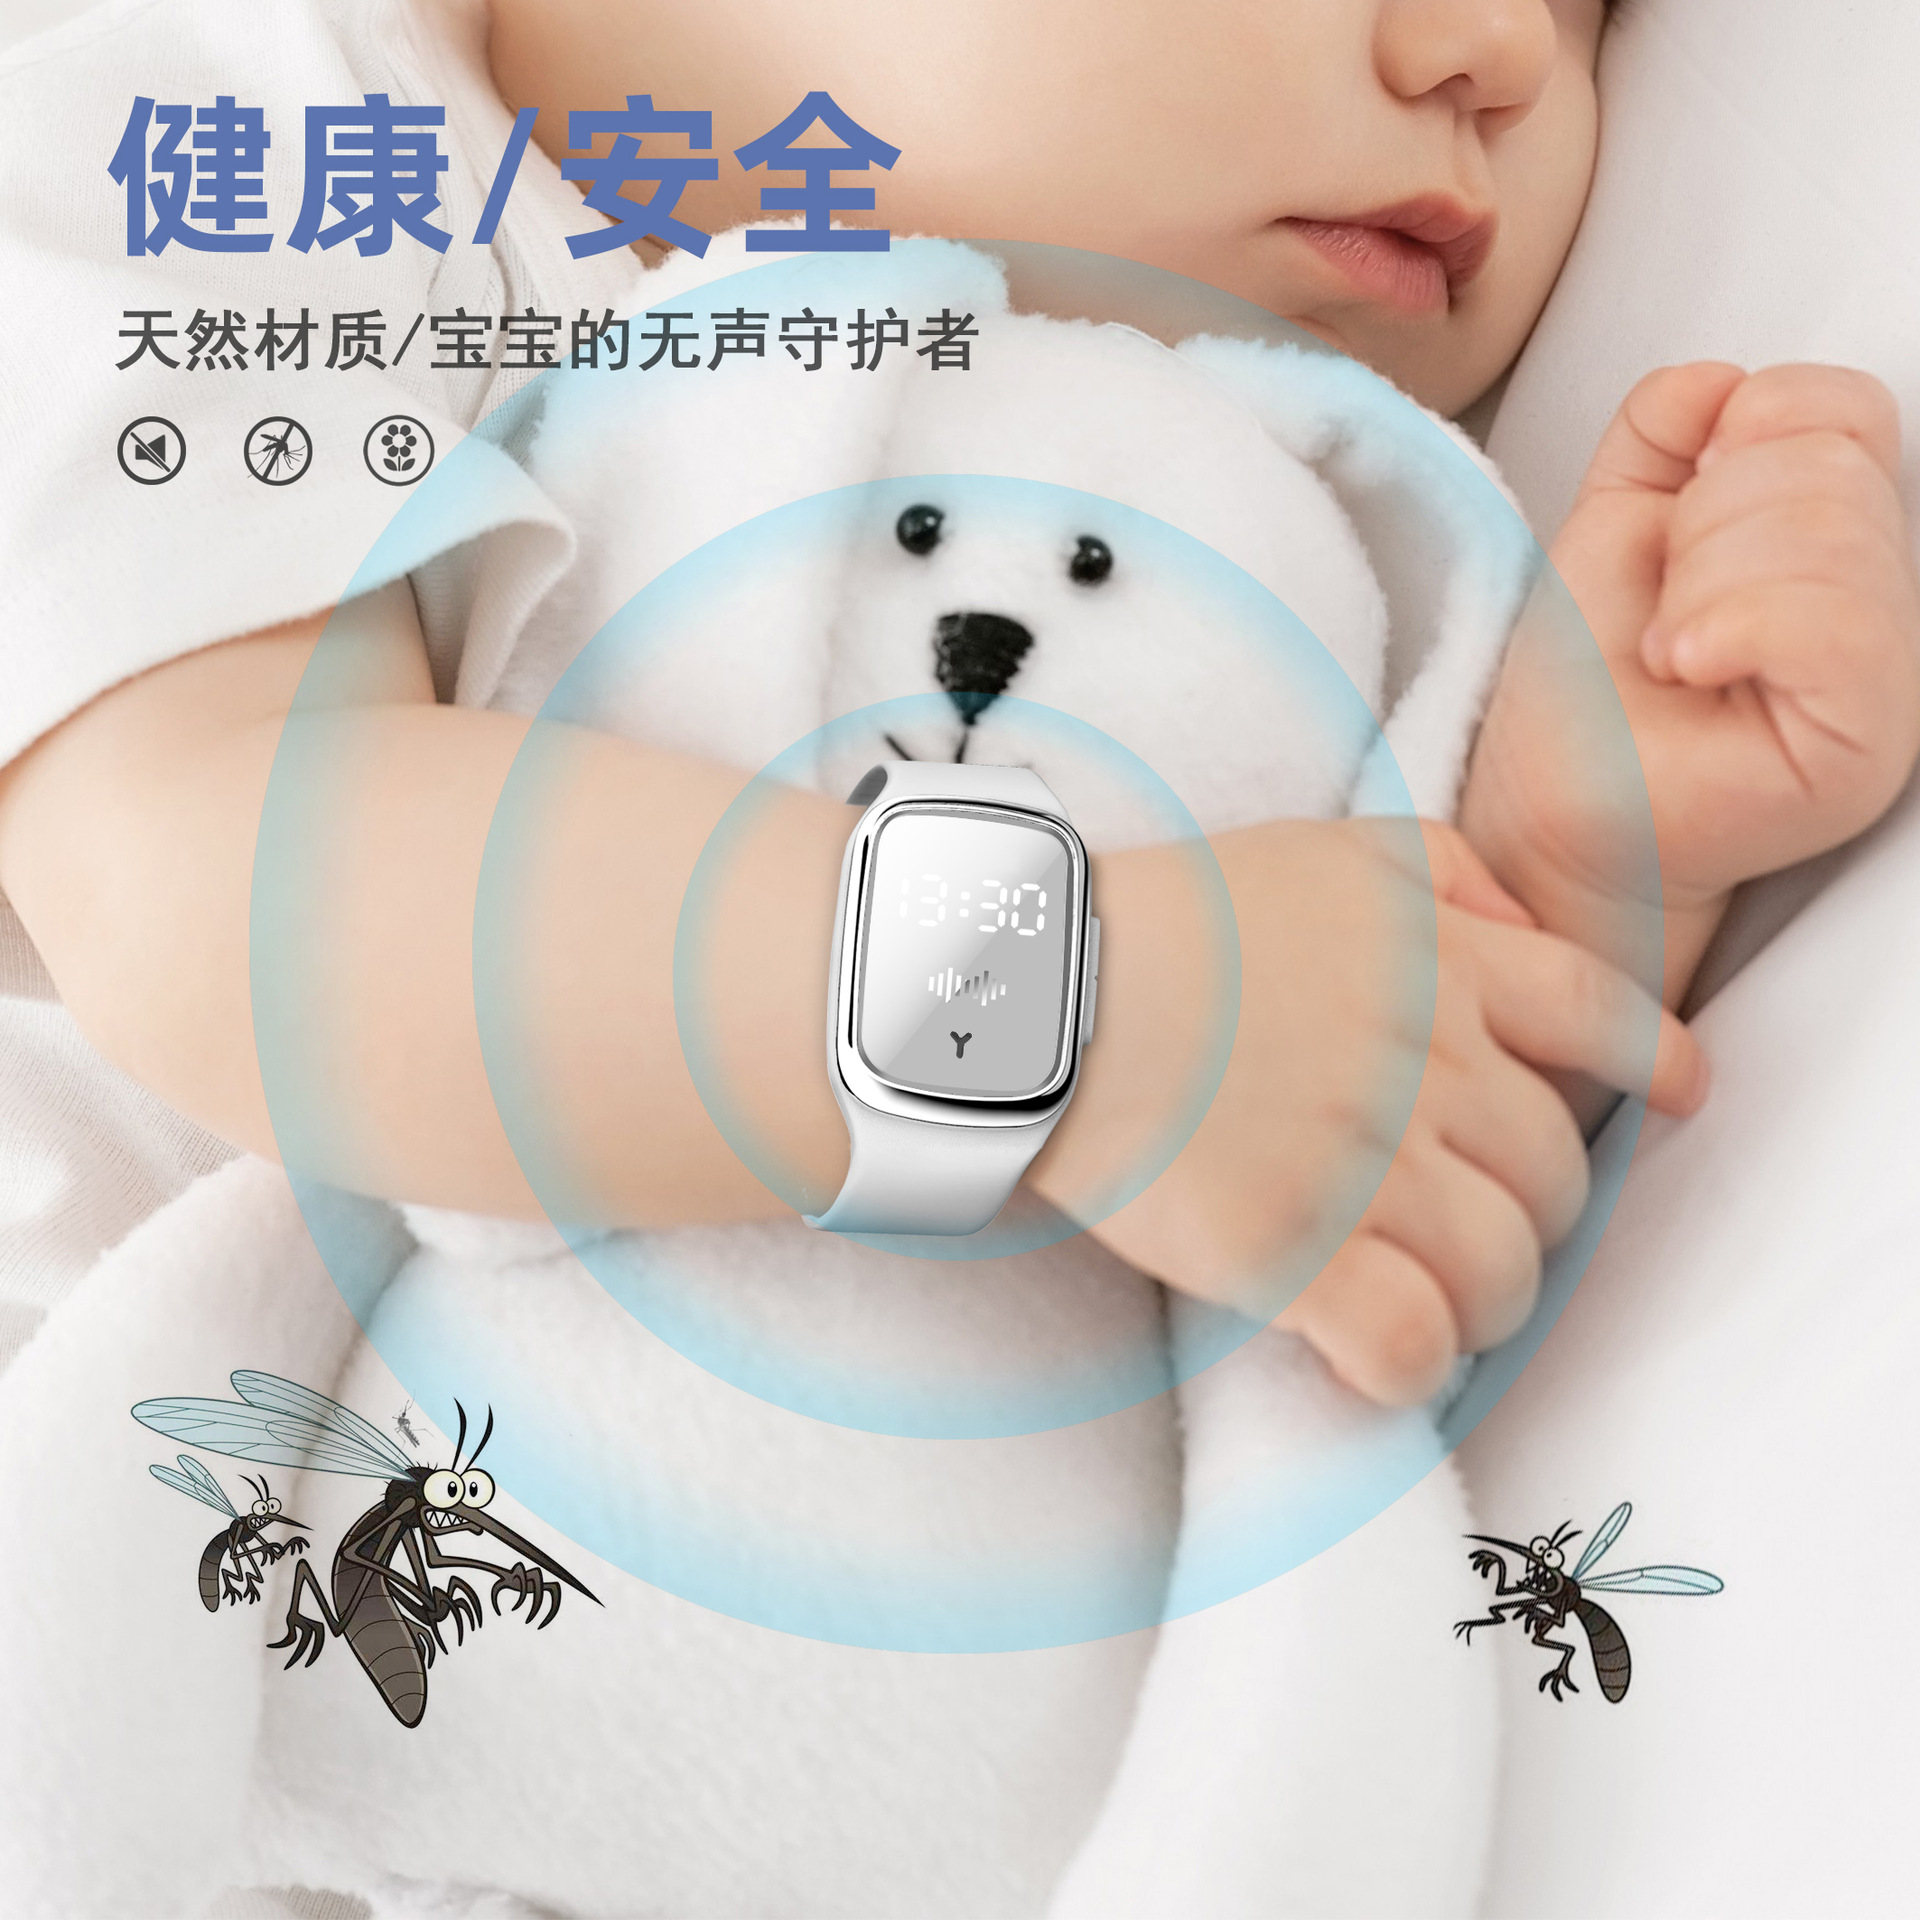 m2 ultrasonic mosquito repellent stickers children baby mosquito repellent stickers adult pregnant women baby outdoor portable mosquito repellent bracelet